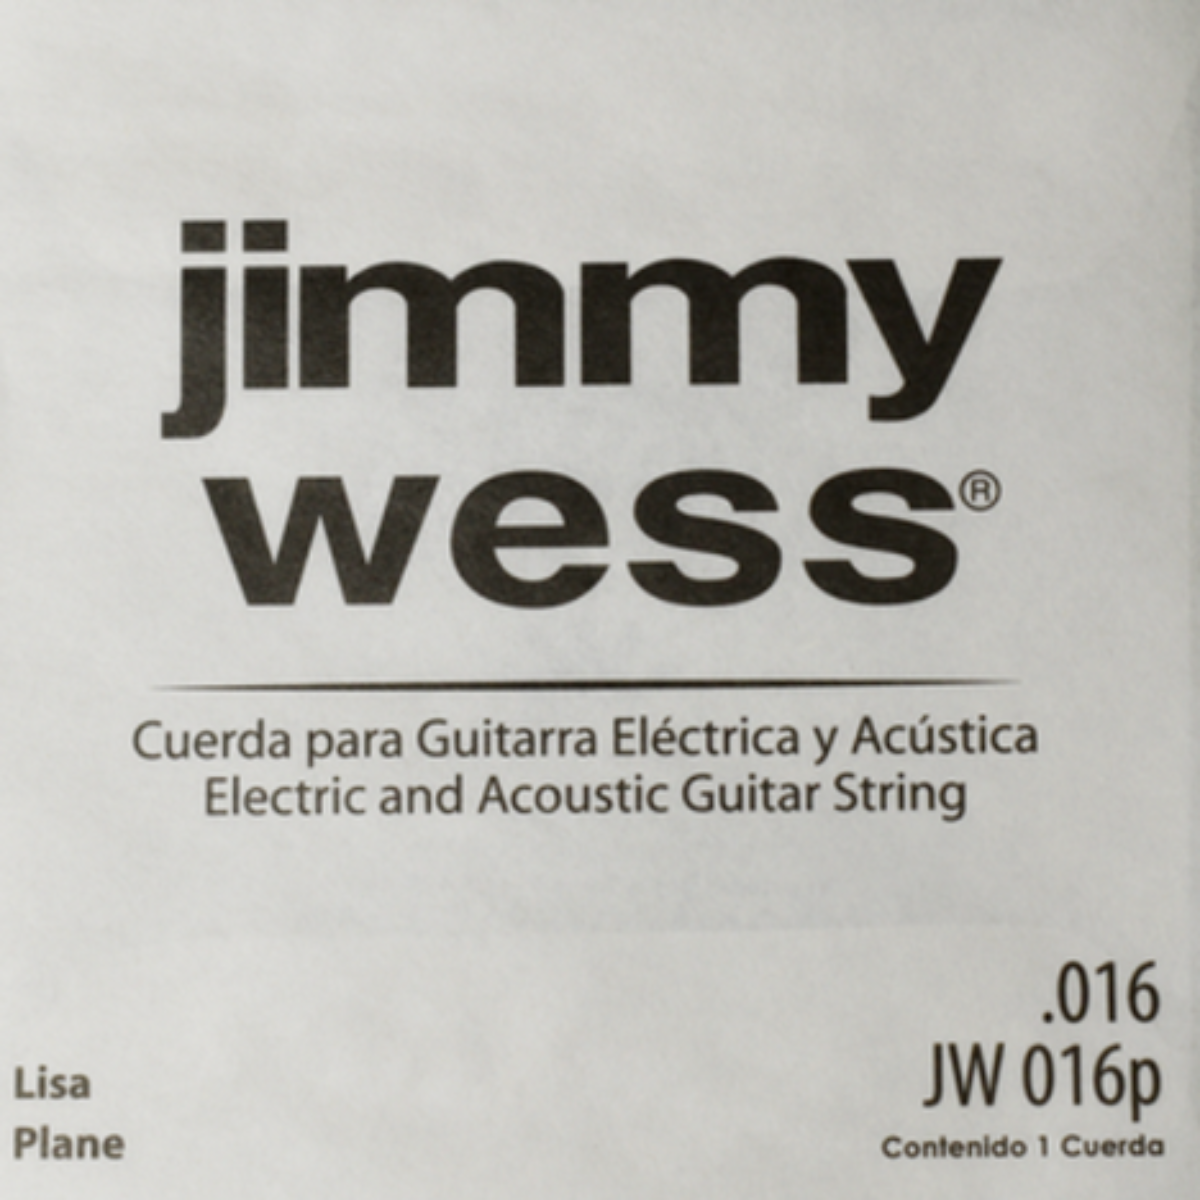 CUERDA P/GUITARRA ELECTRICA/ACUSTICA JIMMYWESS LISA 016